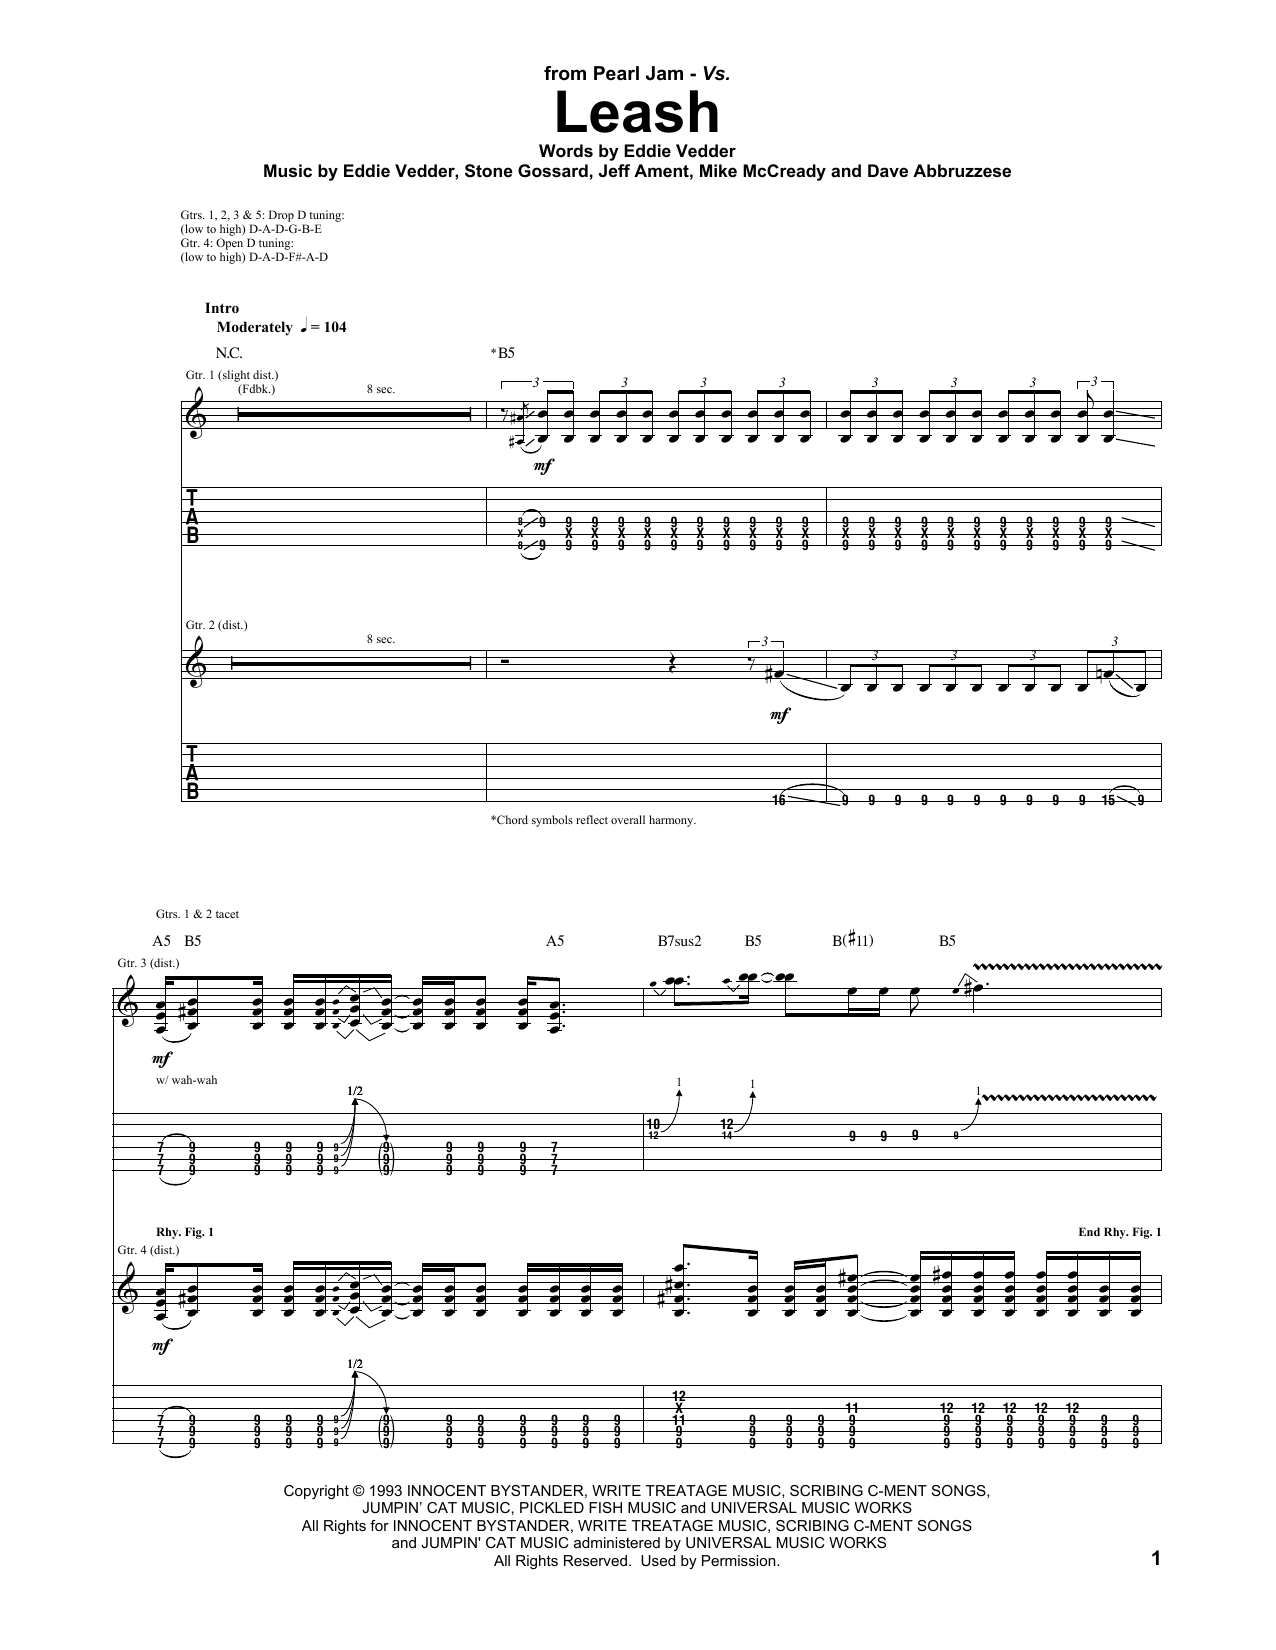 Pearl Jam Leash Sheet Music Notes & Chords for Guitar Tab - Download or Print PDF